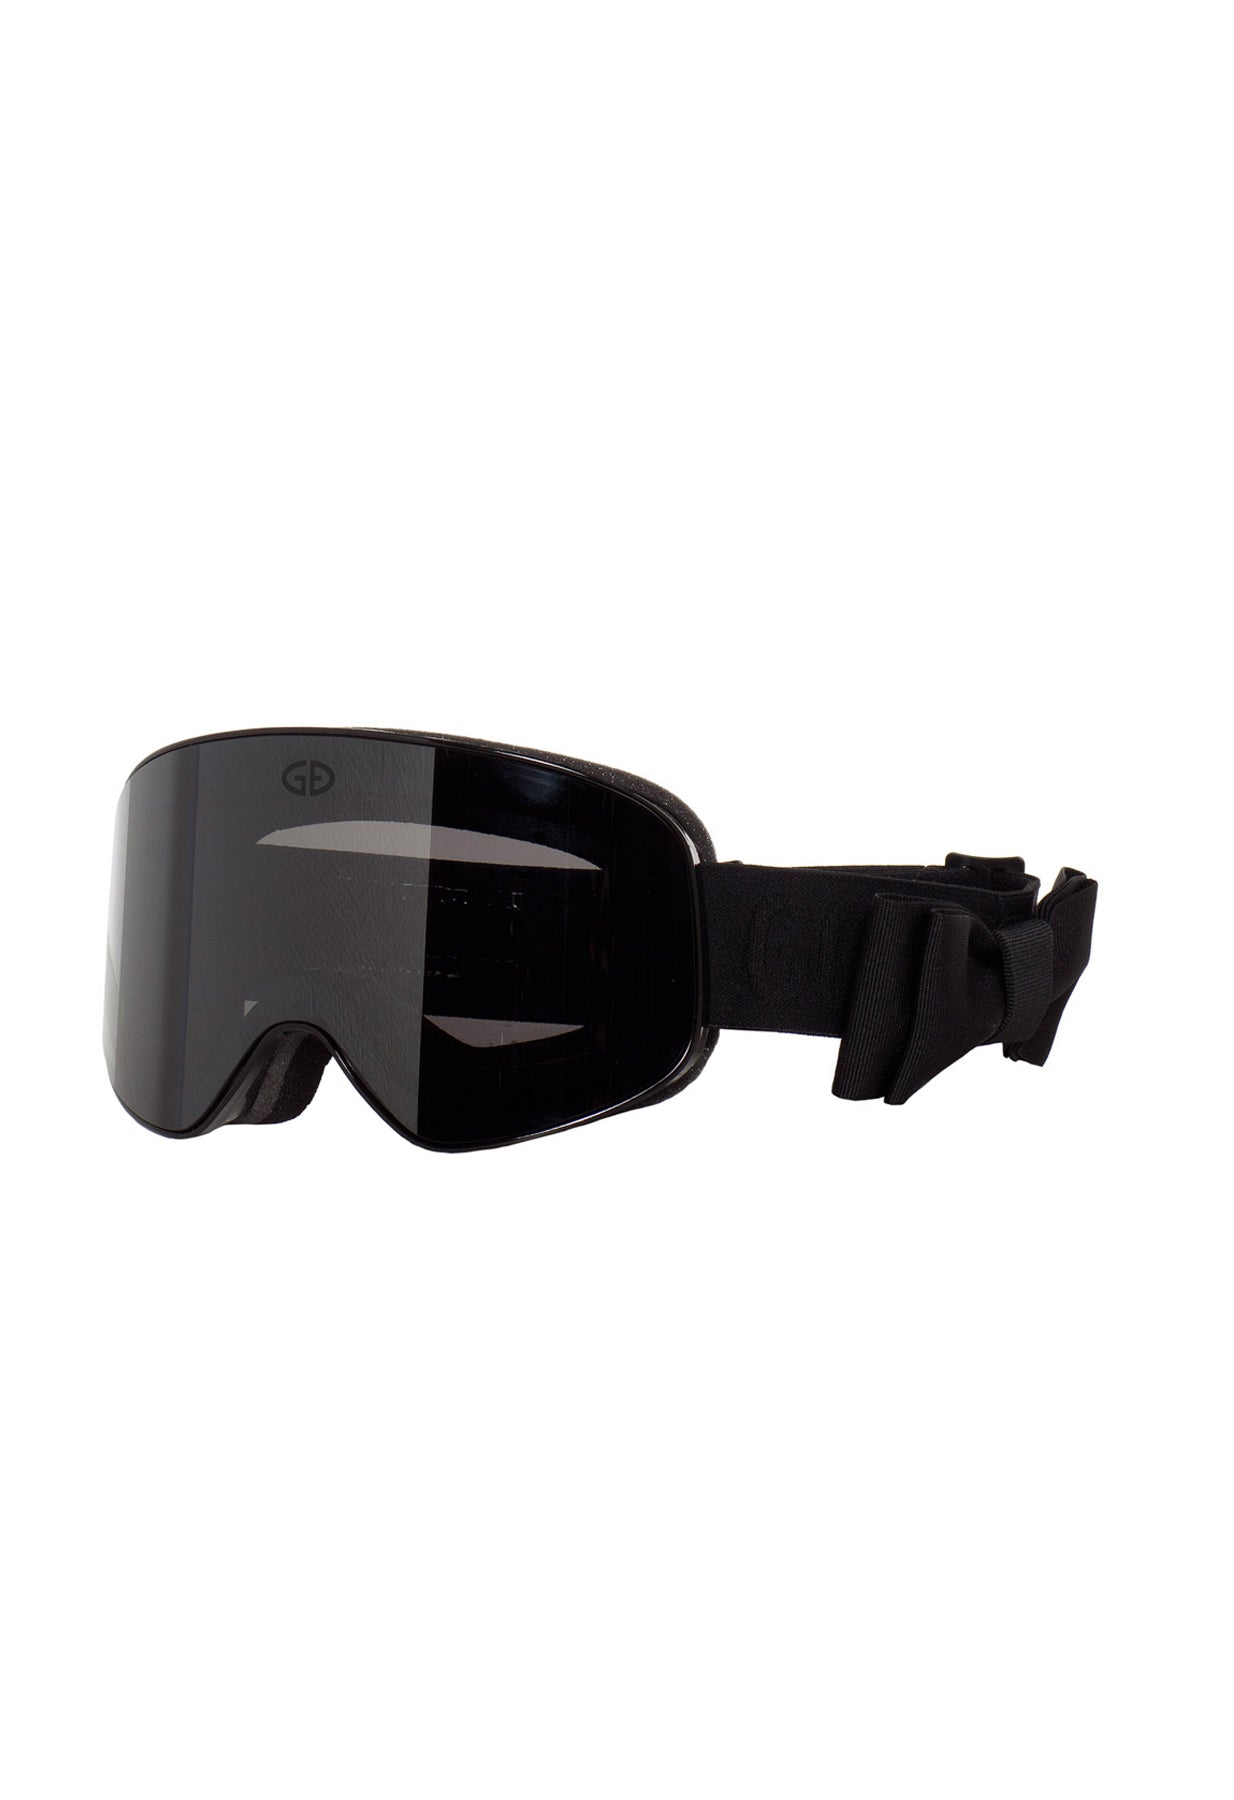 Goldbergh Dazzler Ski Goggle in Black with Bow on Headband